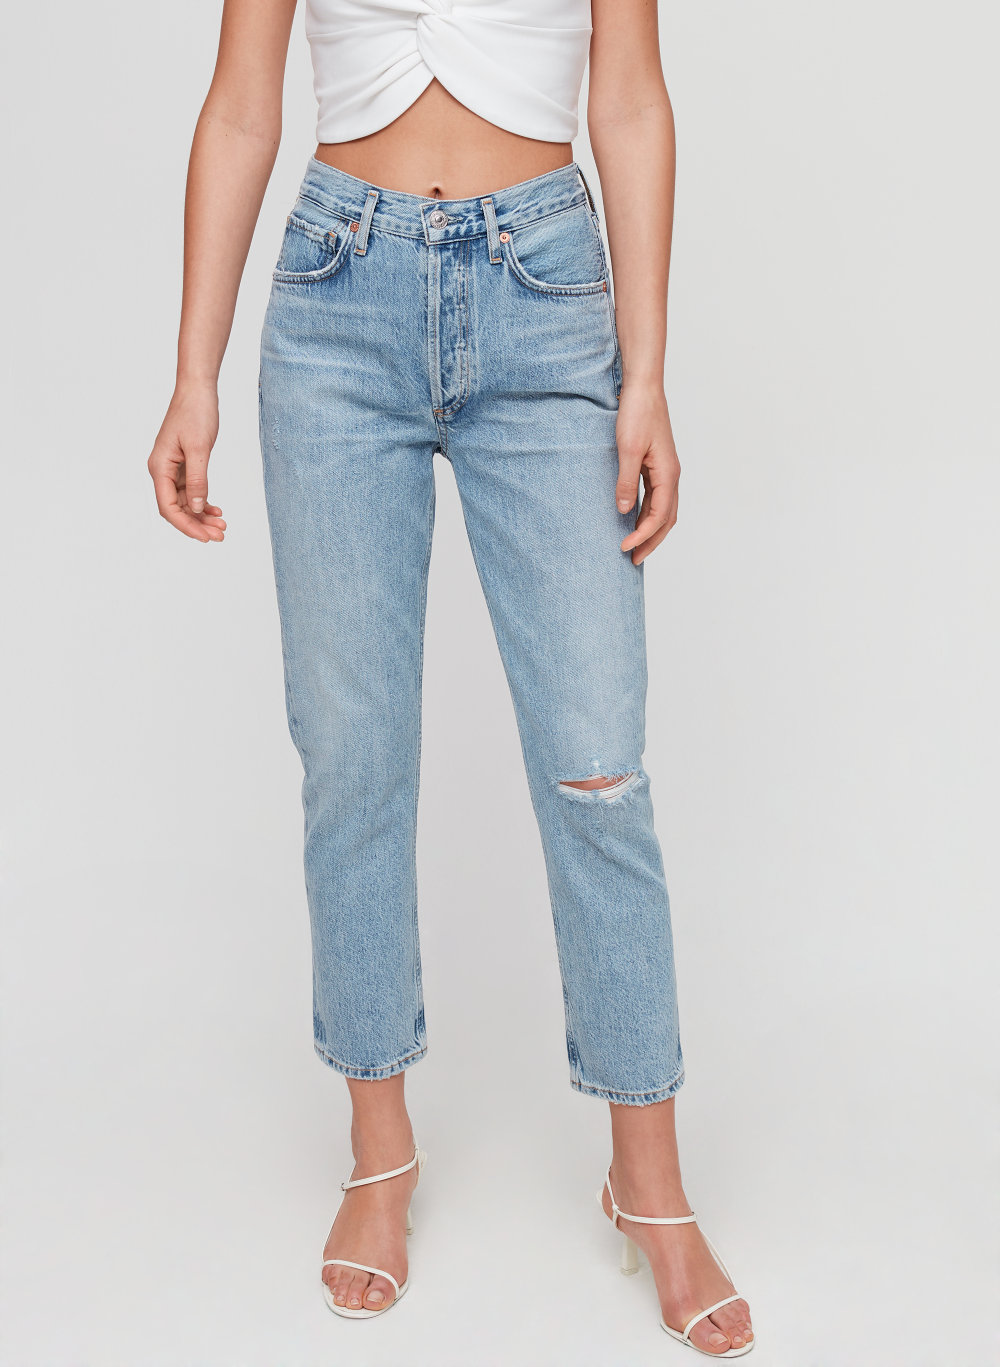 citizen brand jeans